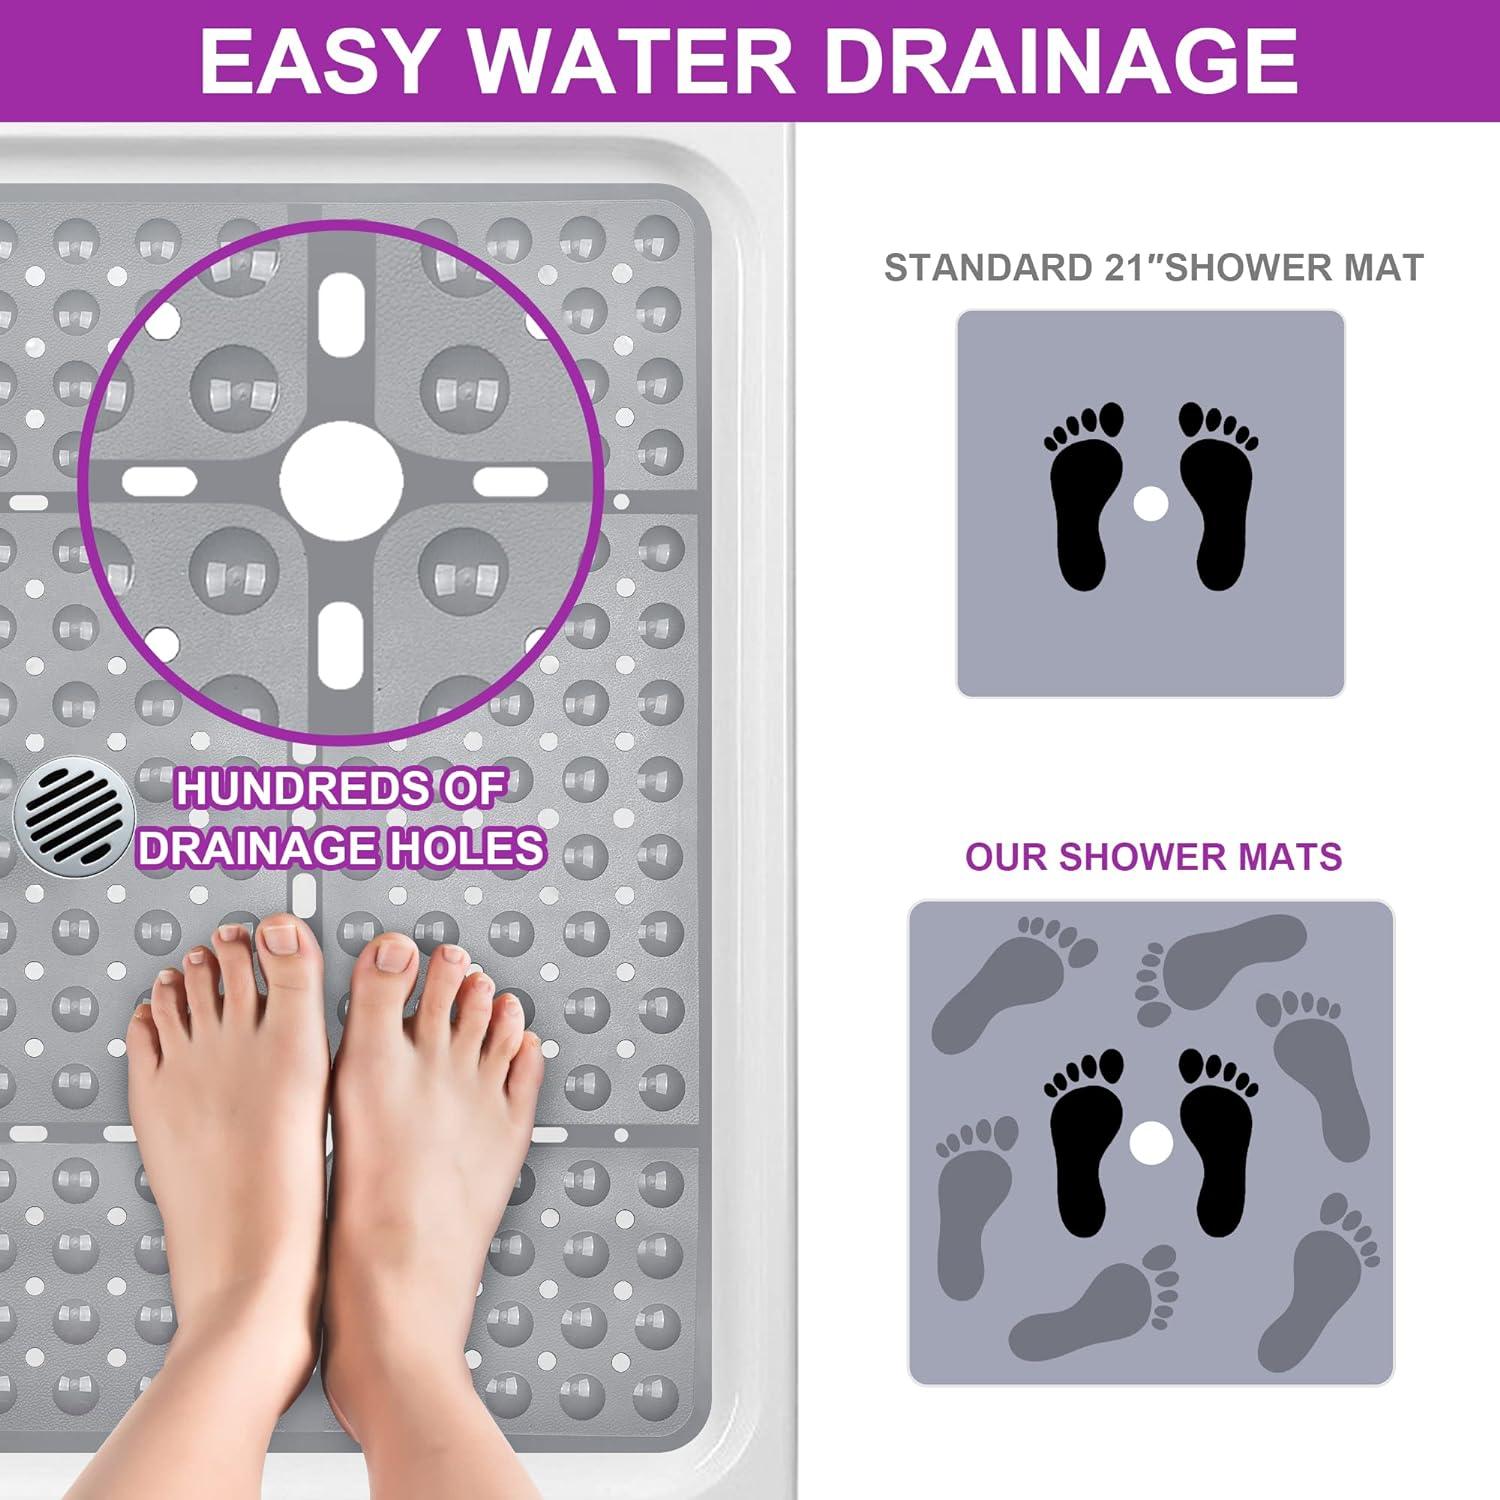 Reetual Tapetes de ducha XL antideslizantes para duchas, tapete de baño de 27 x - VIRTUAL MUEBLES